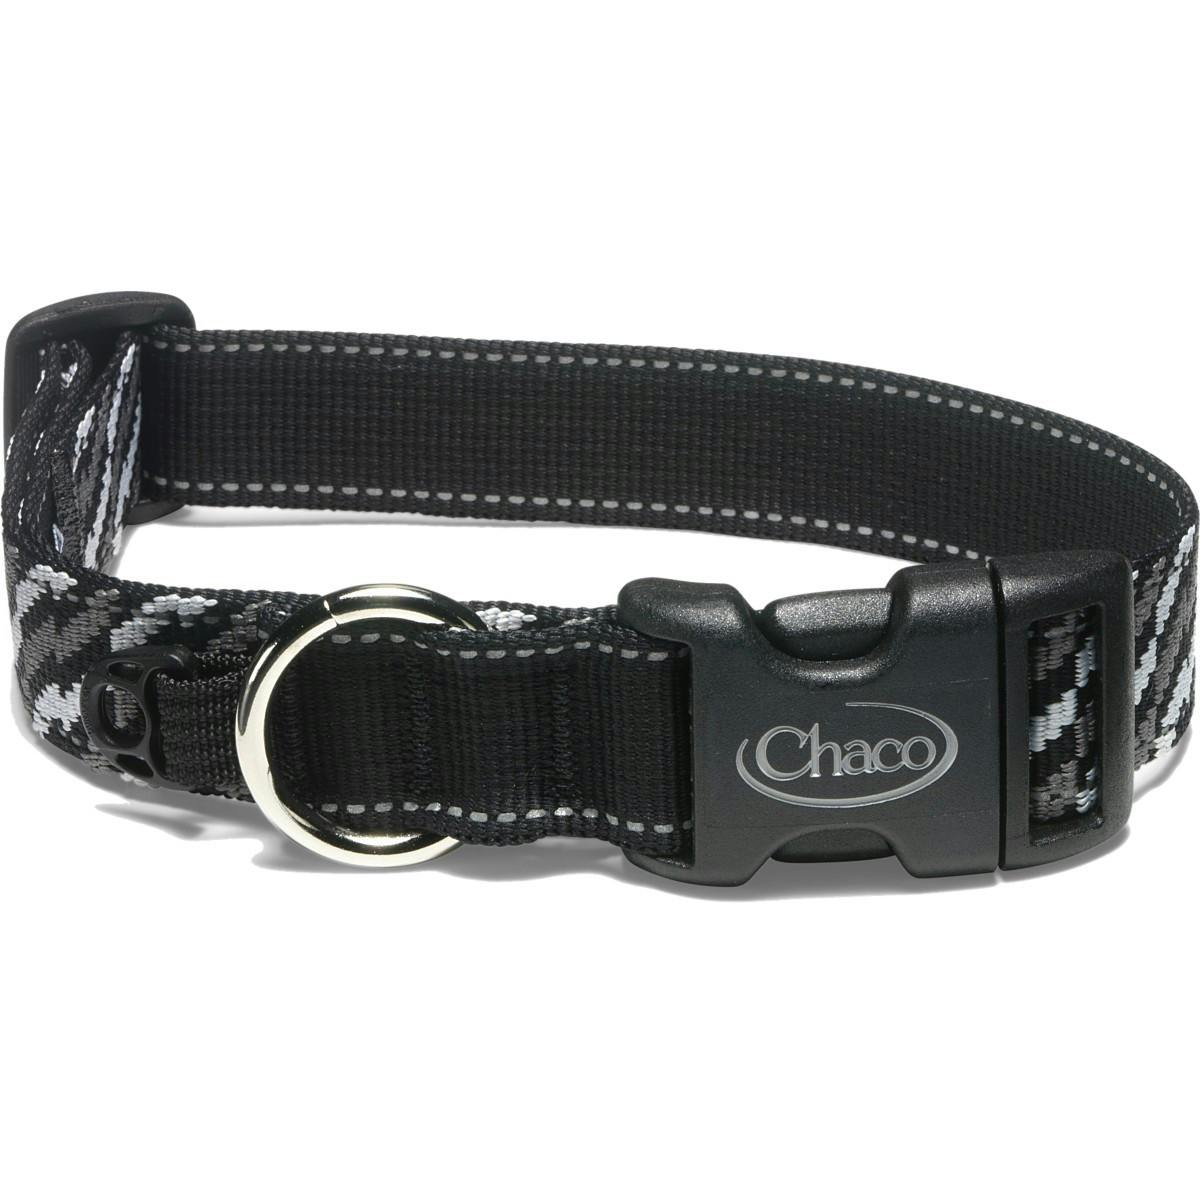 Chaco Dog Collar · Static Black